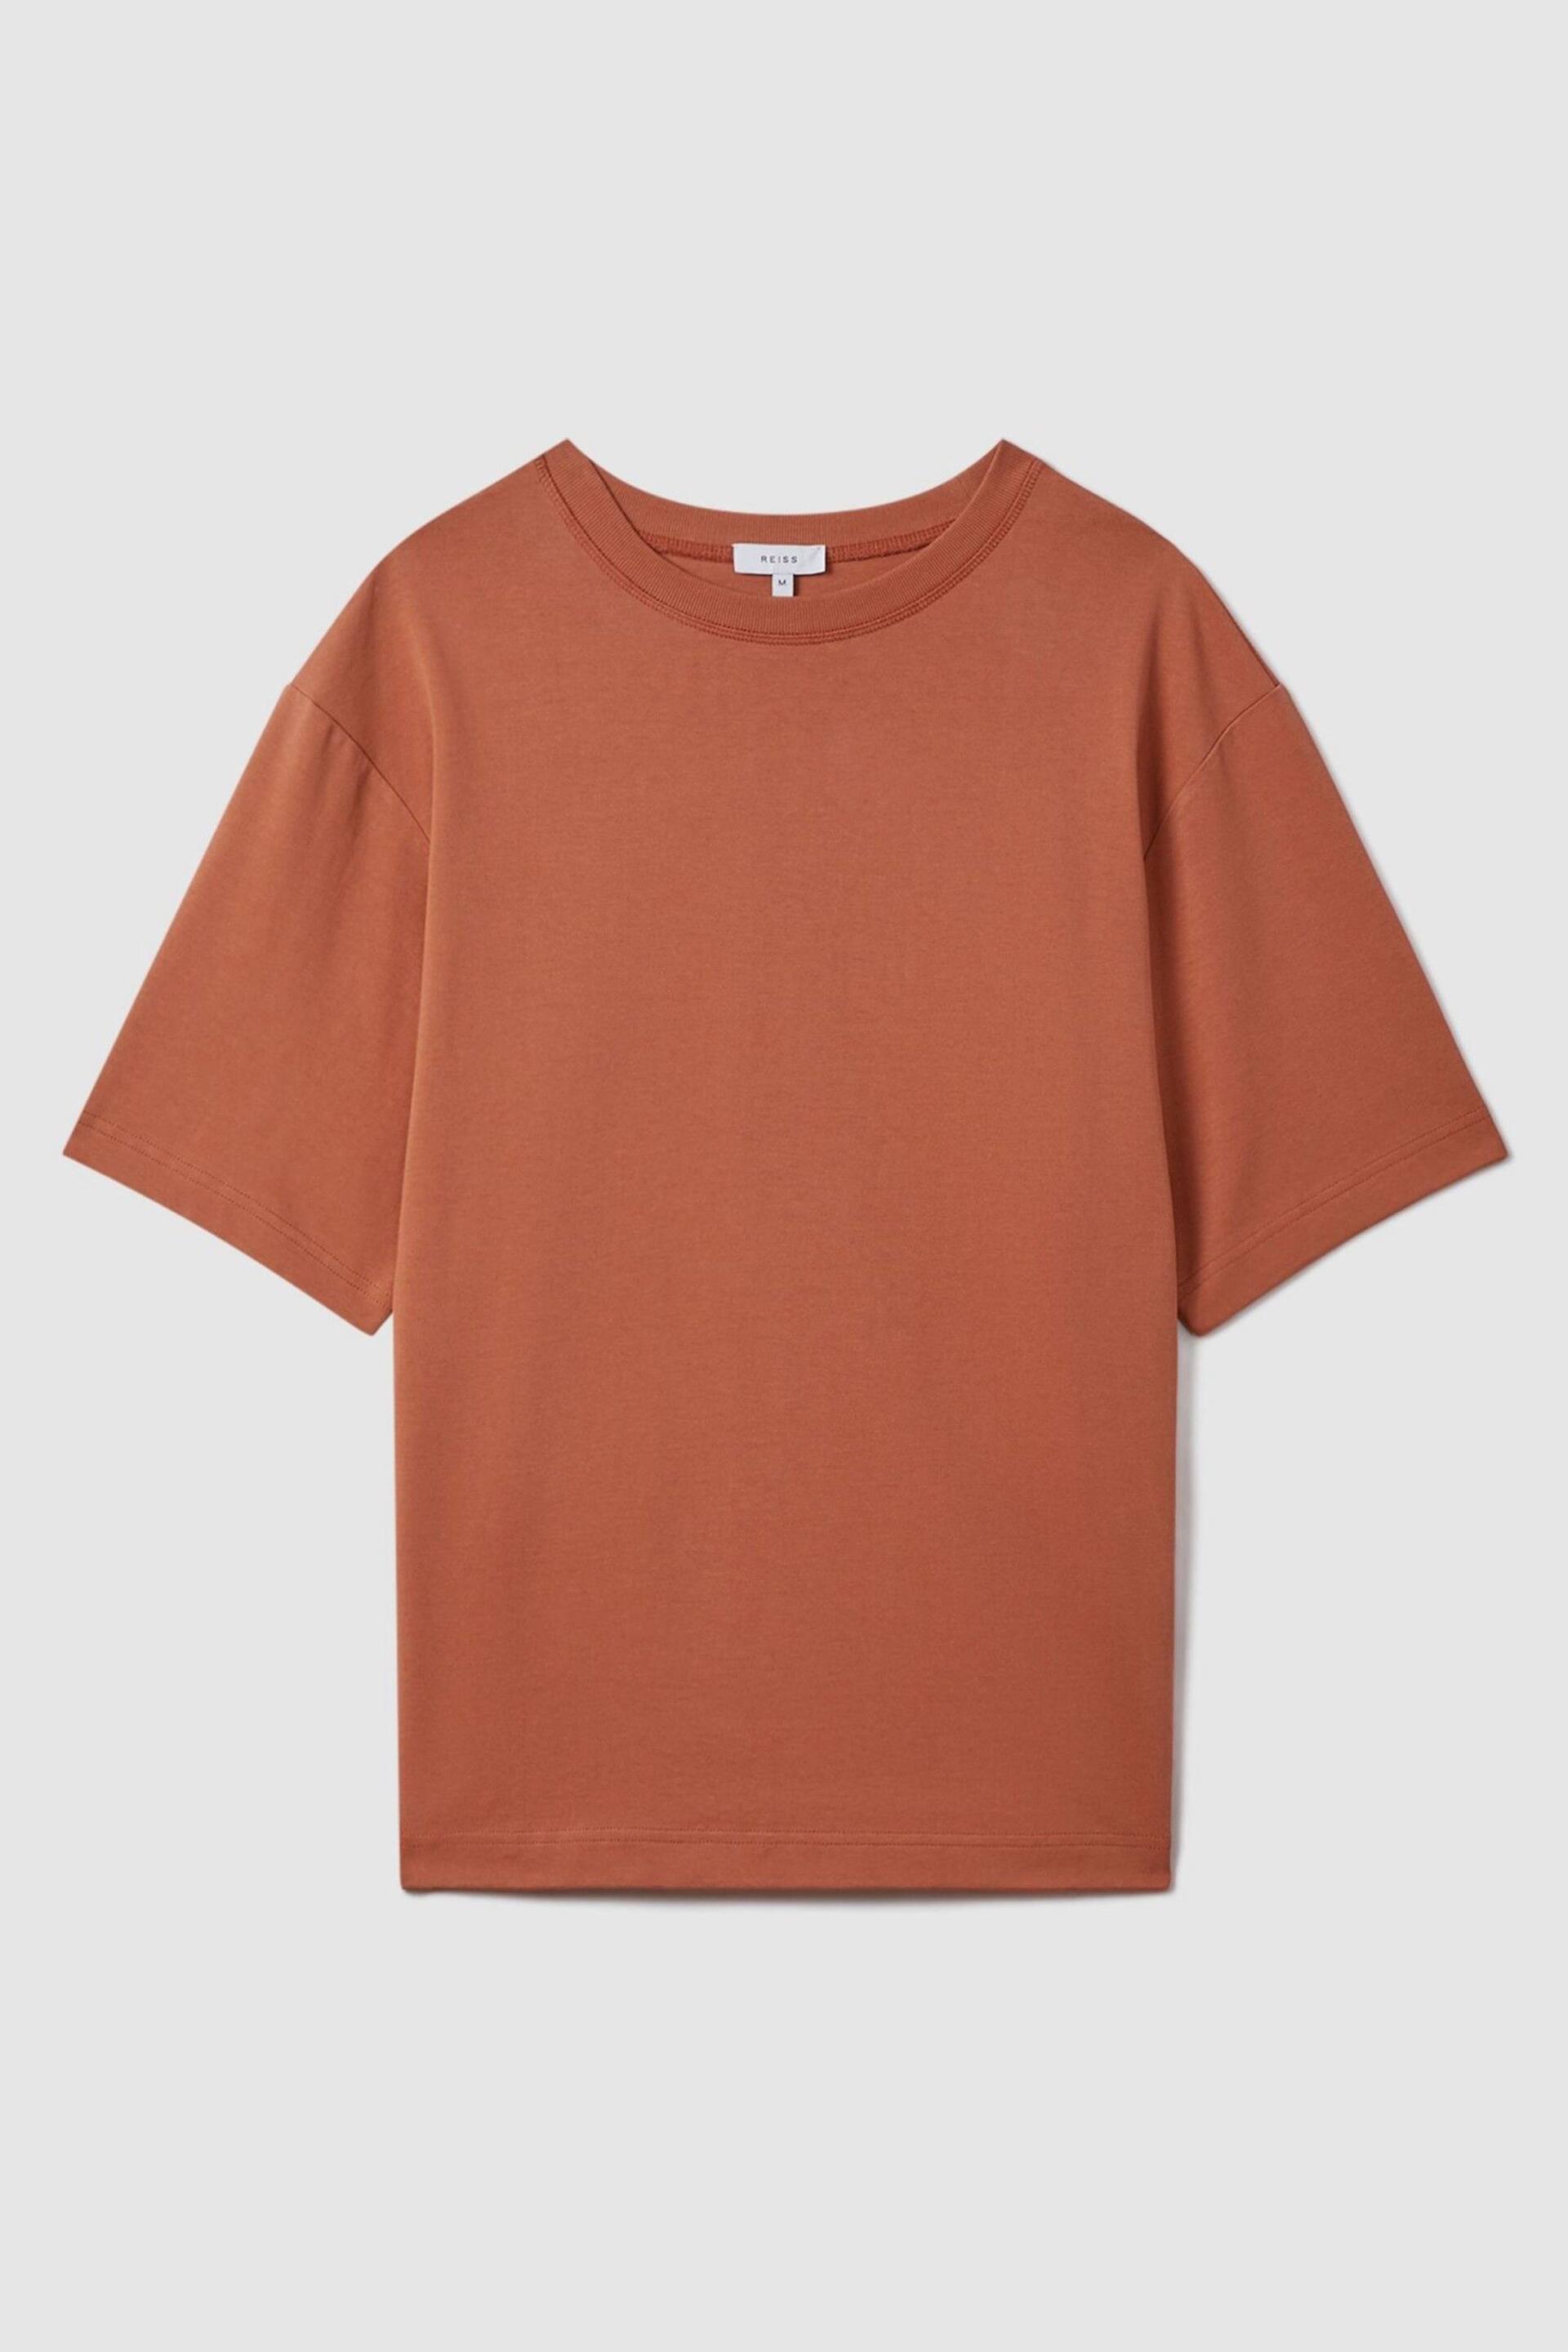 Reiss Raw Sienna Tate Oversized Garment Dye T-Shirt - Image 2 of 5